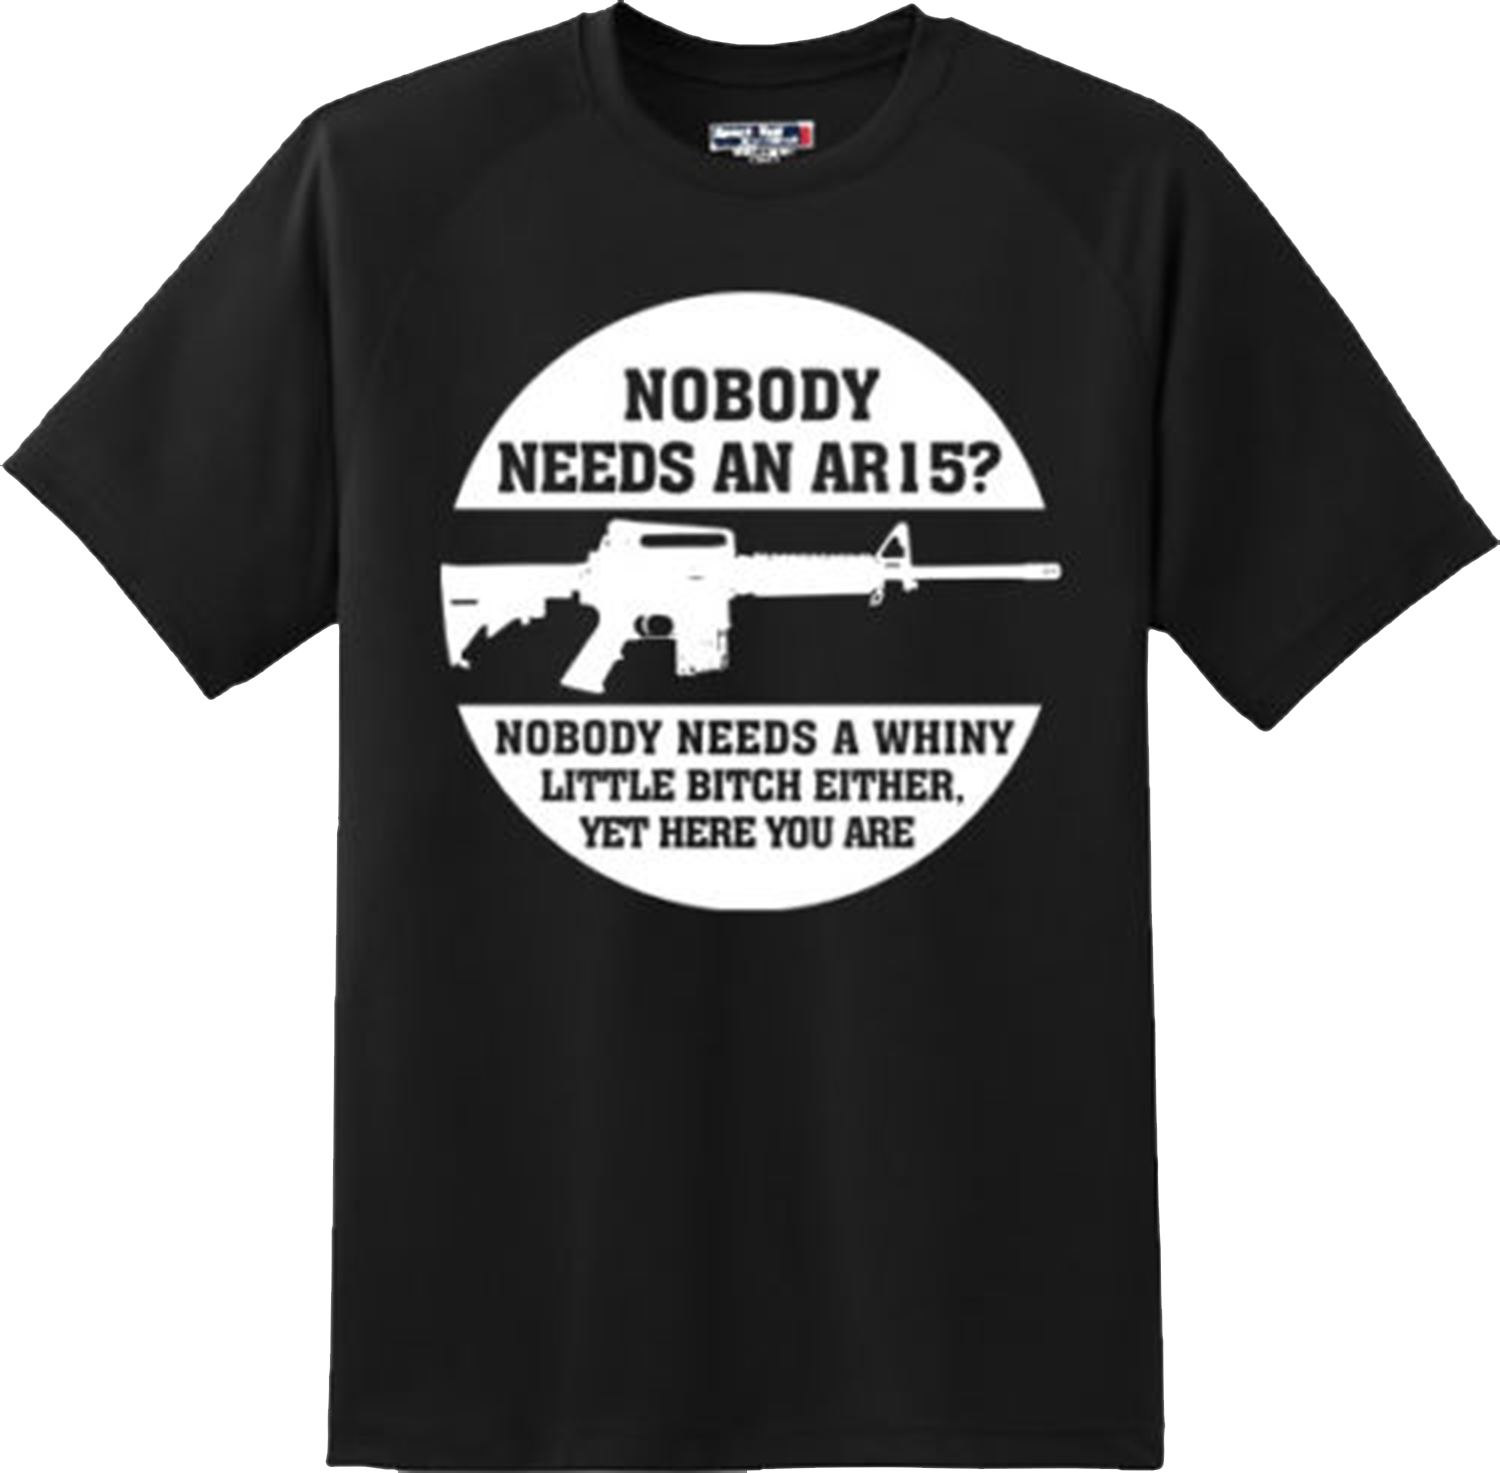 Nobody Needs An AR15? Funny T Shirt Gun Rights Tee